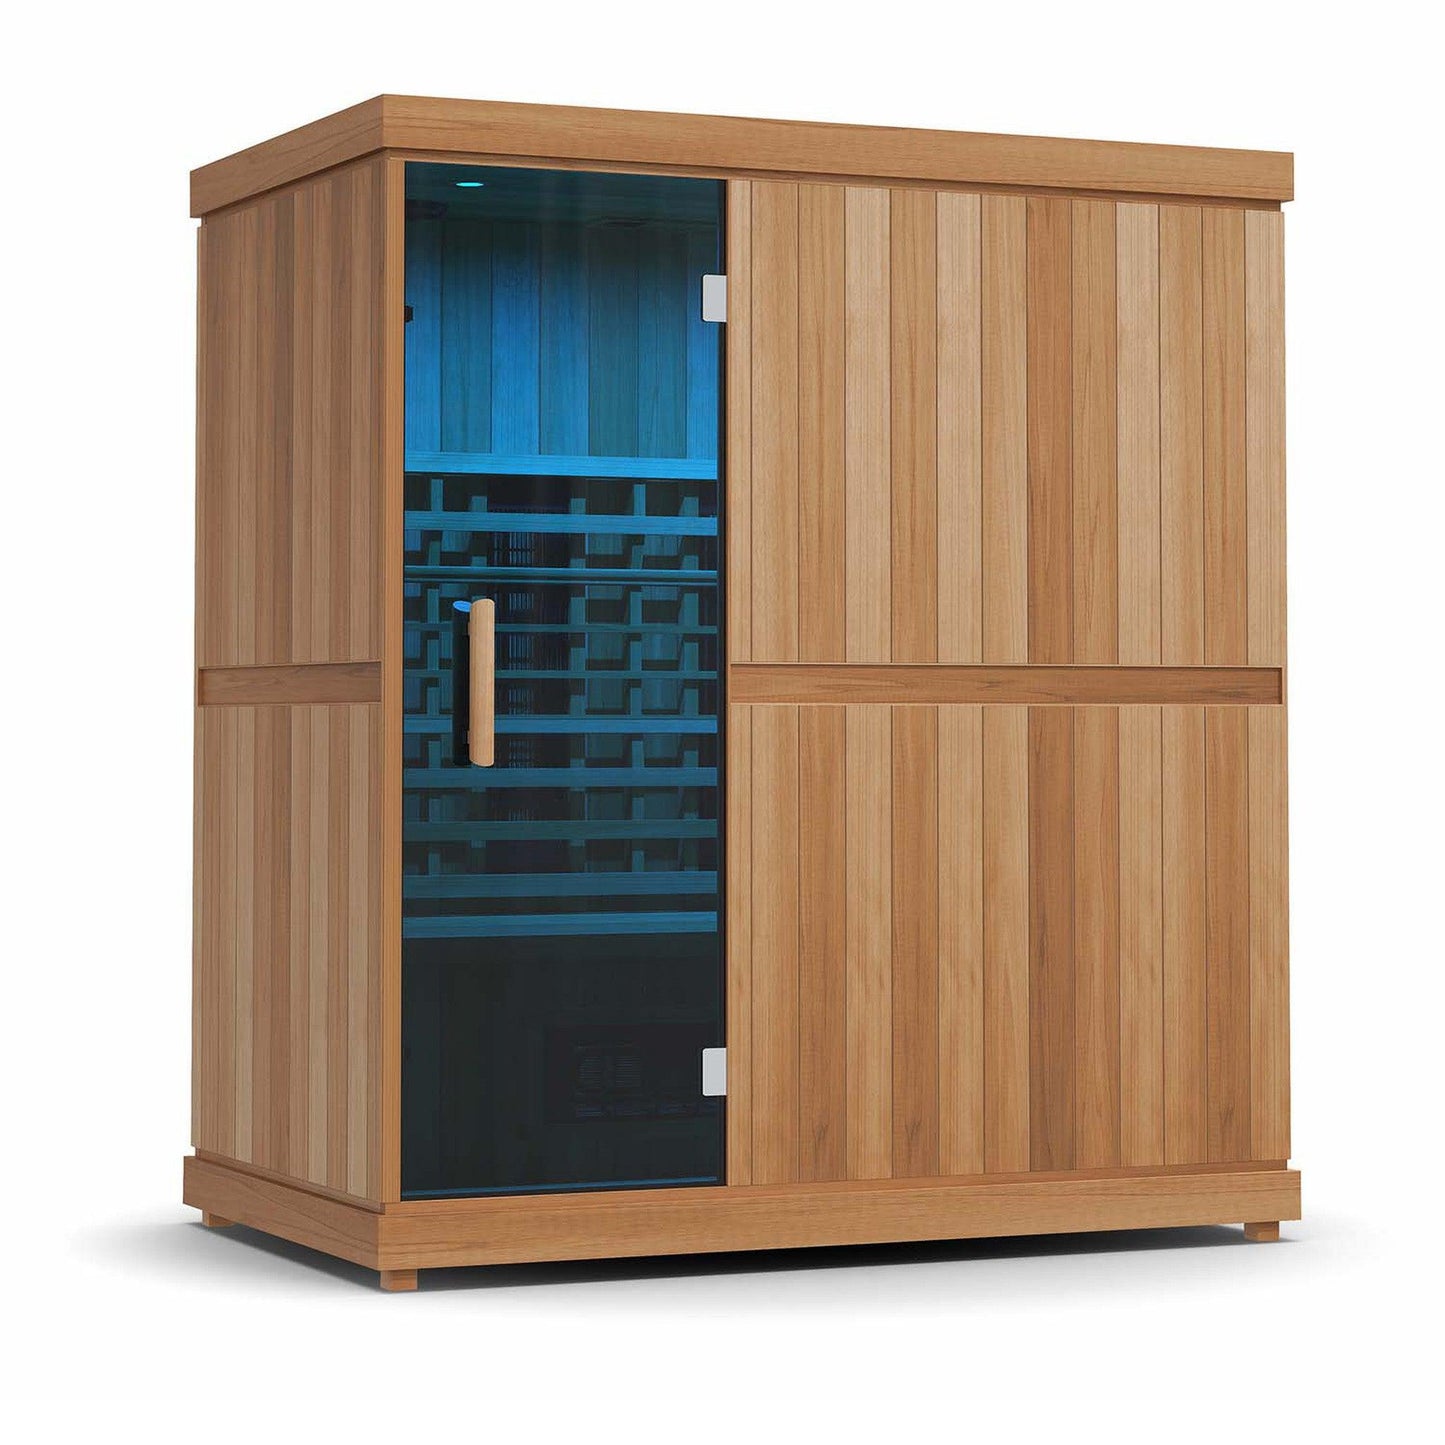 Finnmark Designs FD-3 Full Spectrum 72" 4-Person Home Infrared Sauna